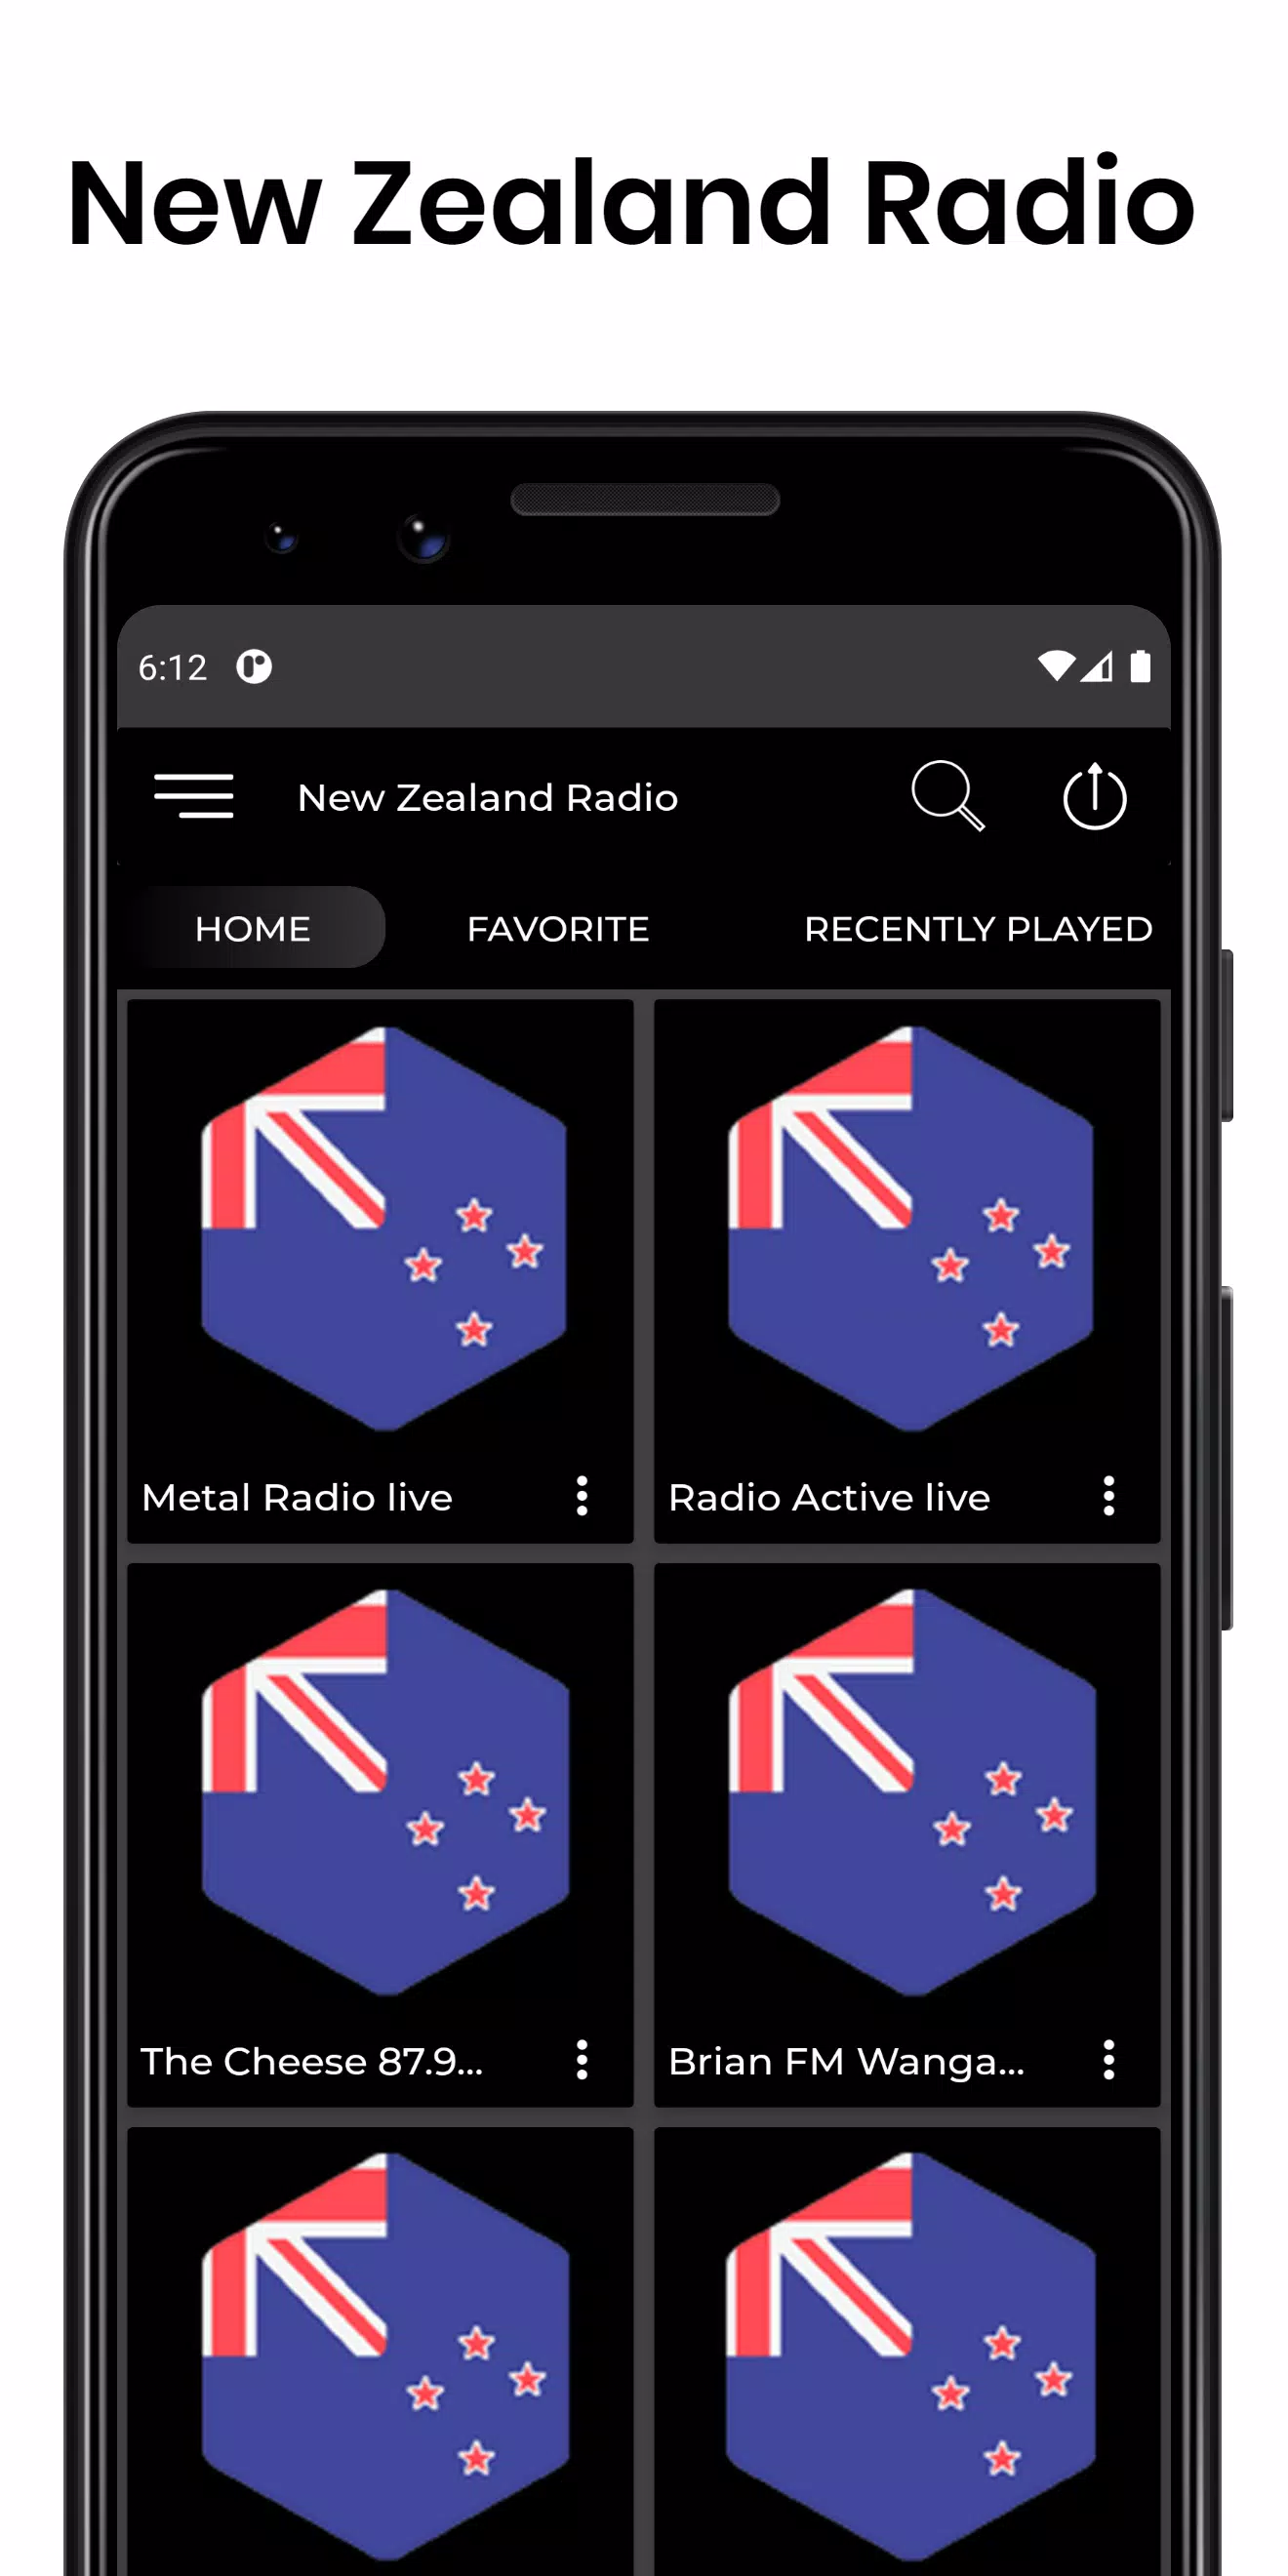 Niu FM NZ LIVE Online FM App APK for Android Download